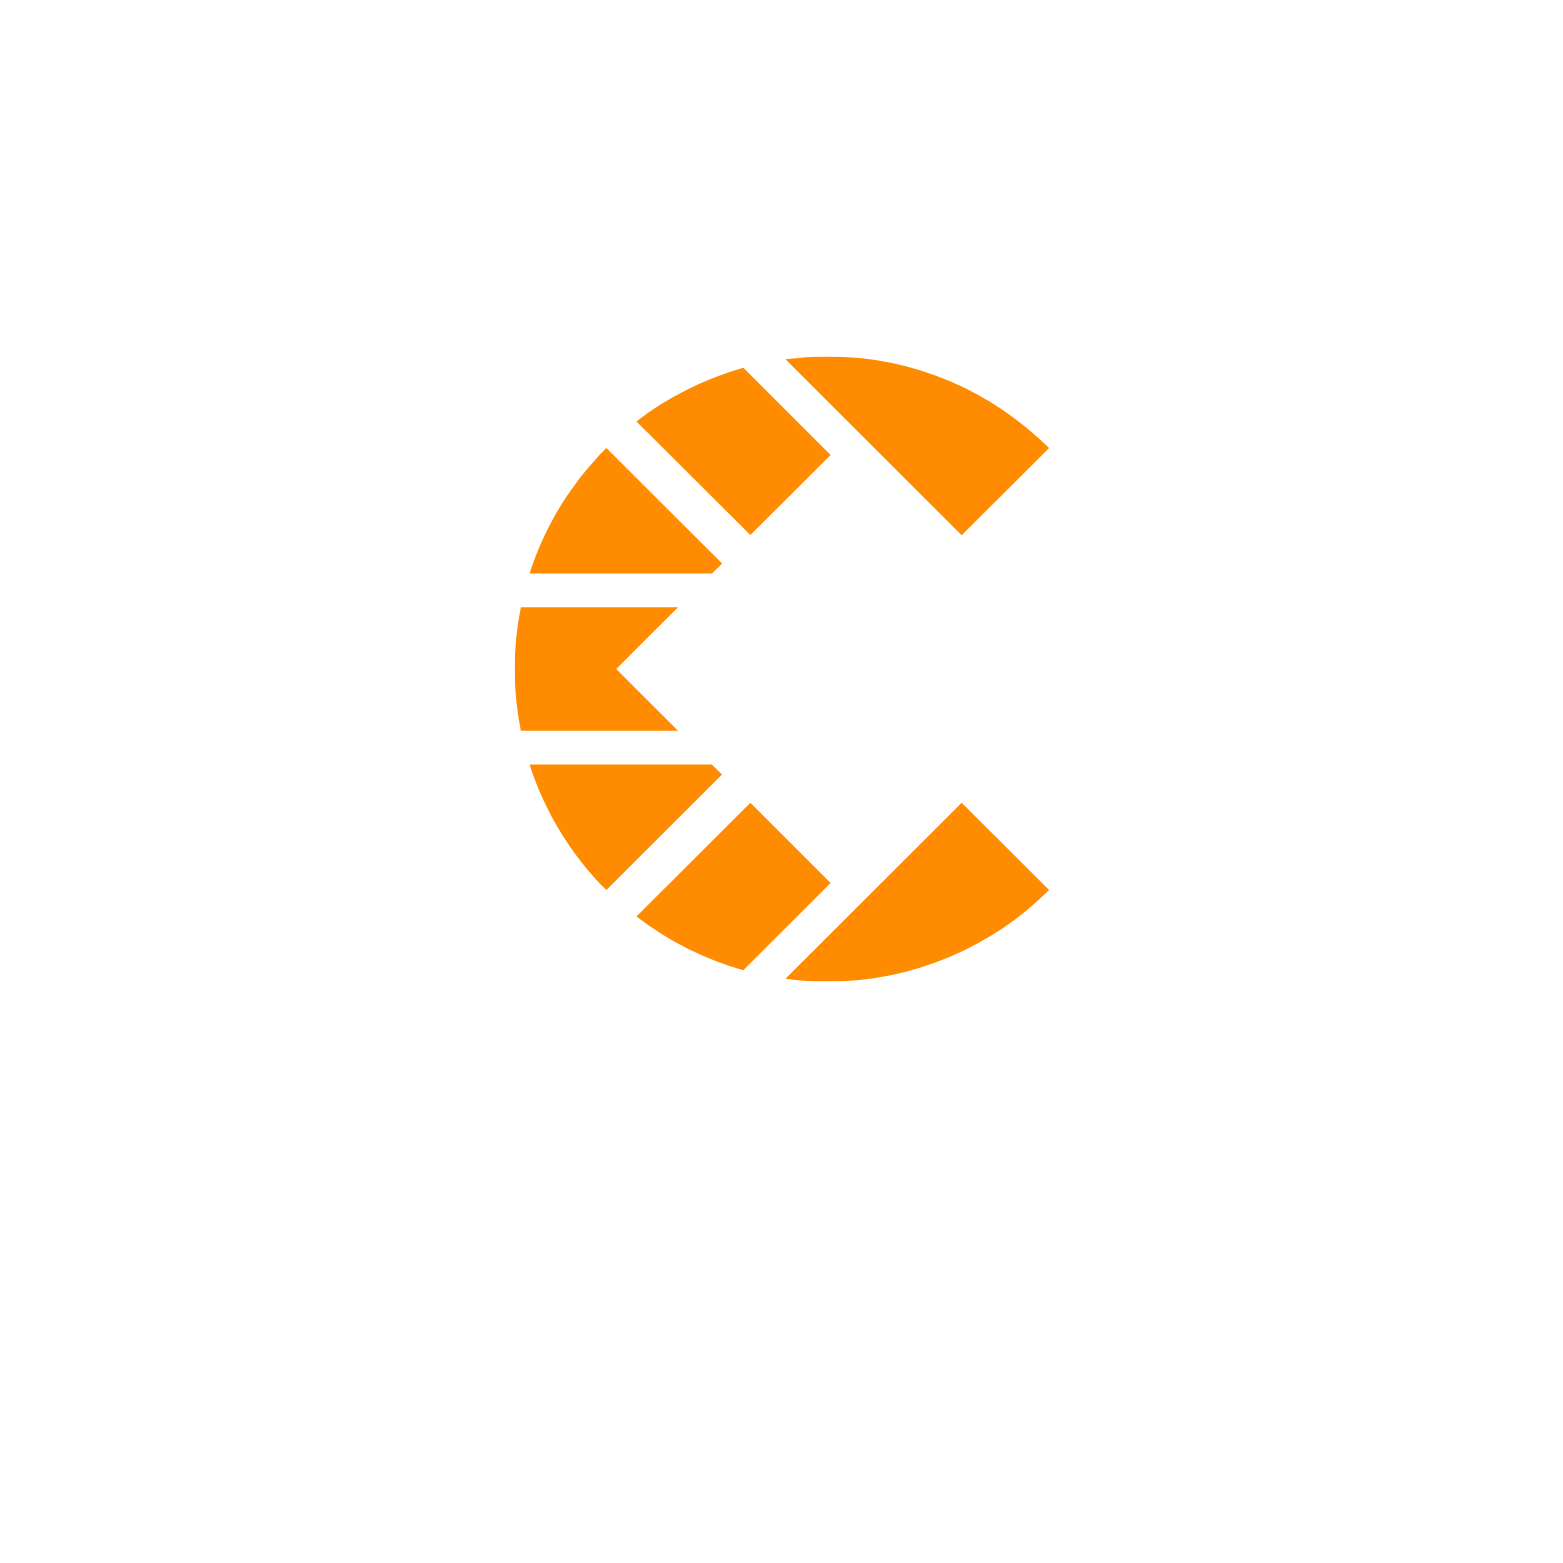 Clout Control